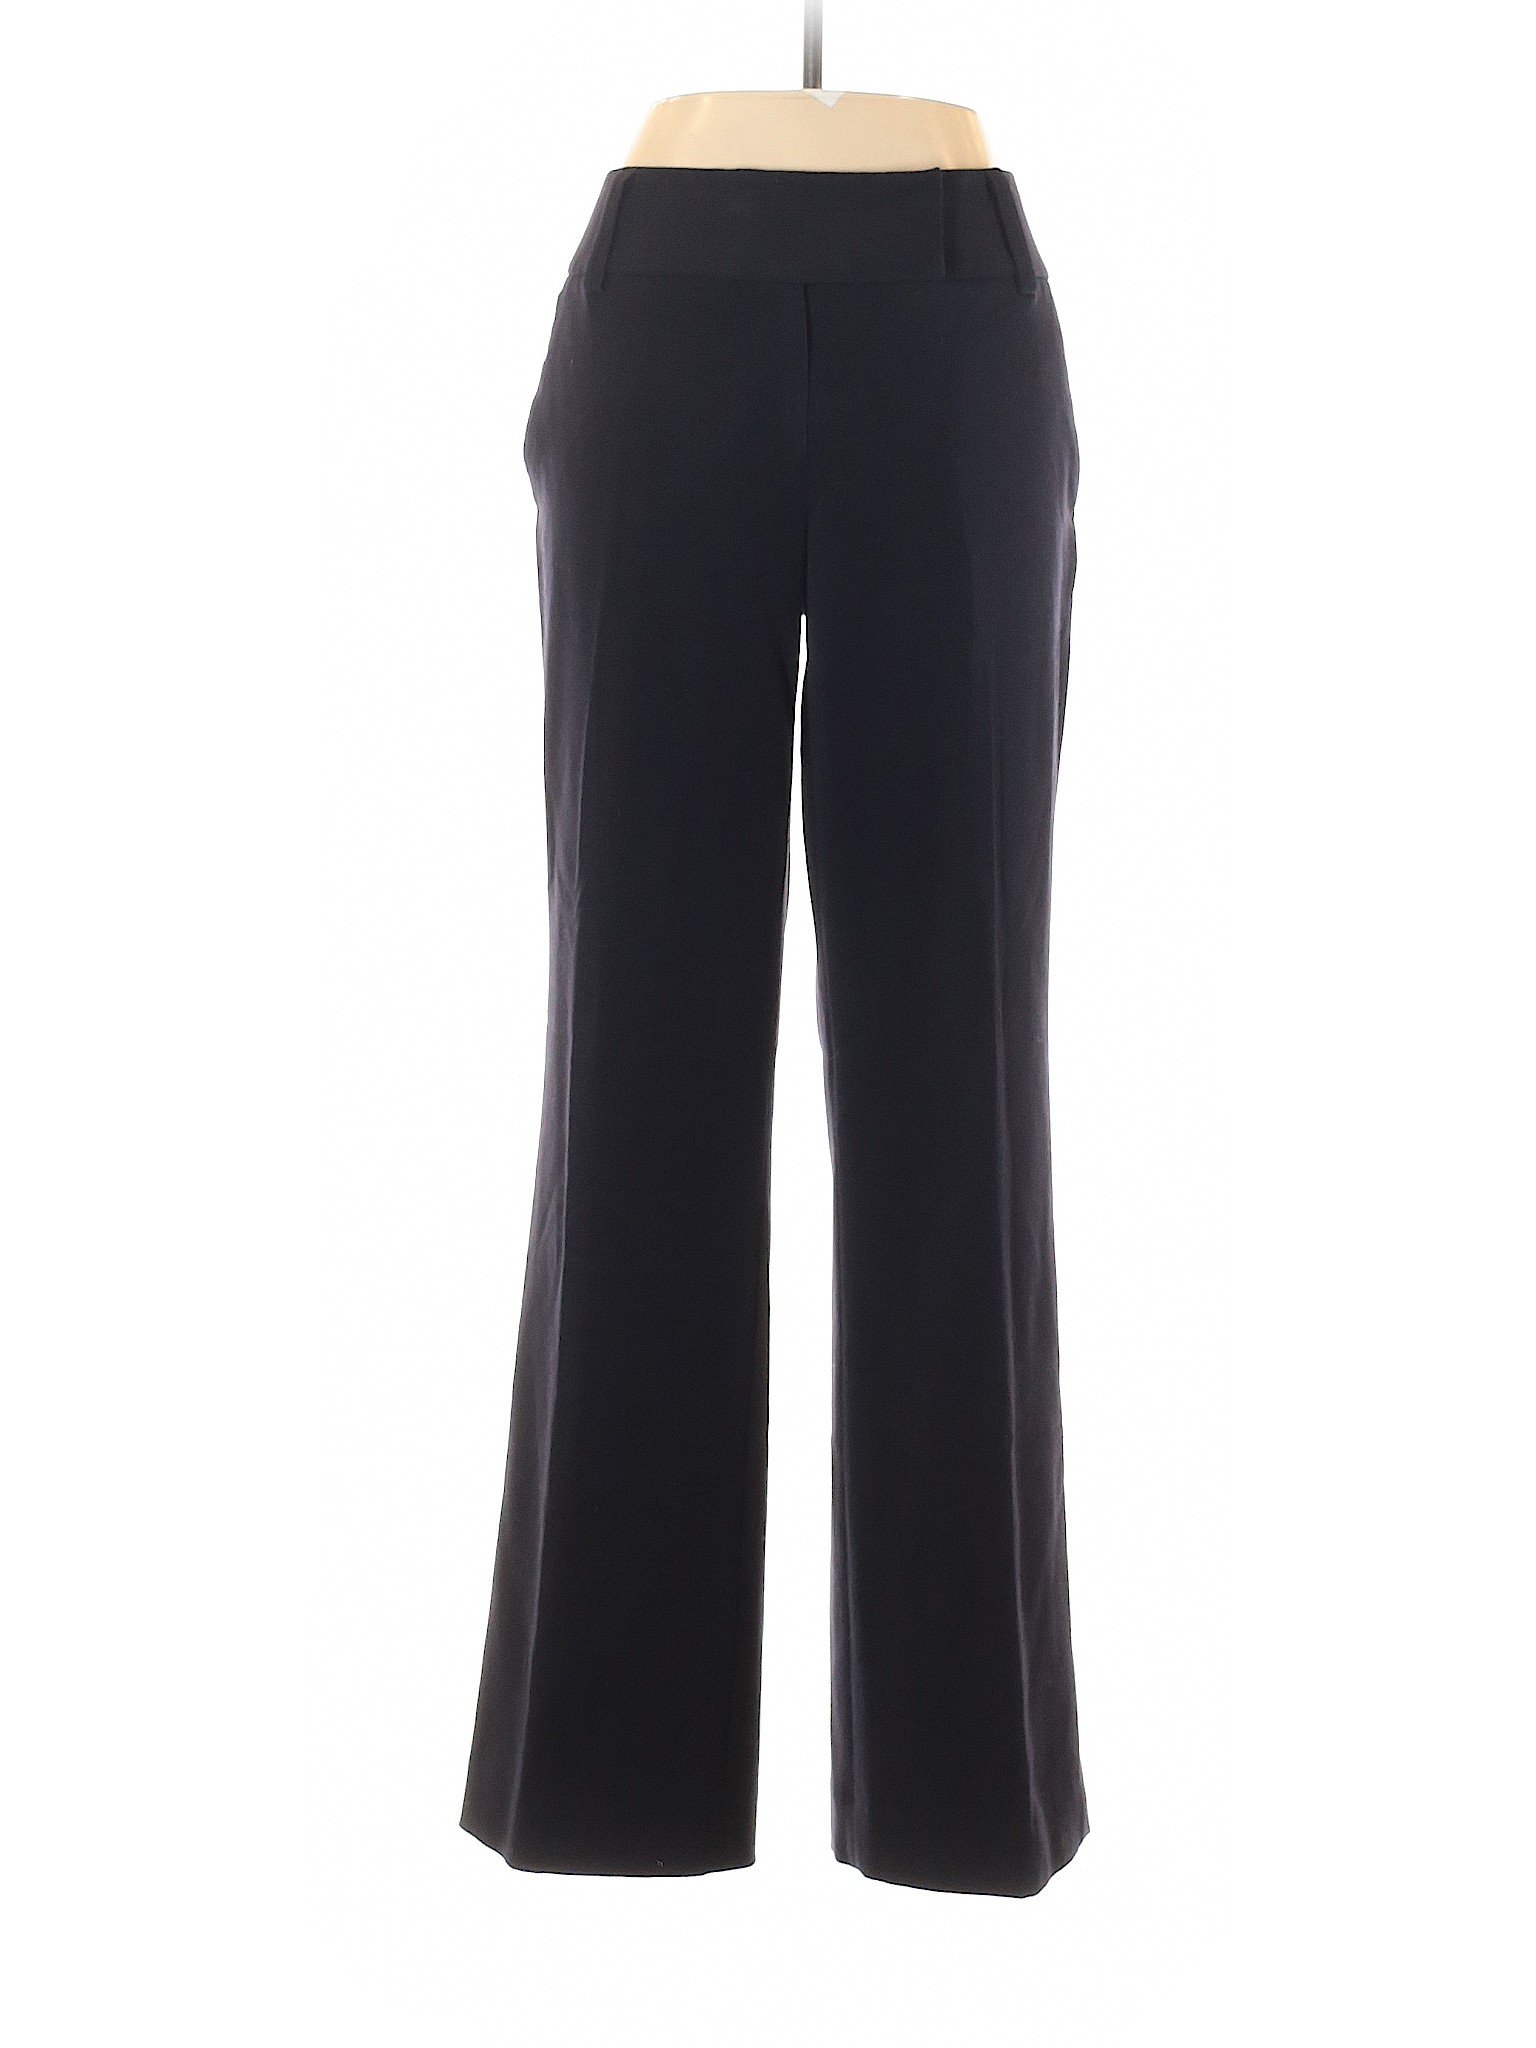 Apt. 9 Women Black Dress Pants 8 | eBay